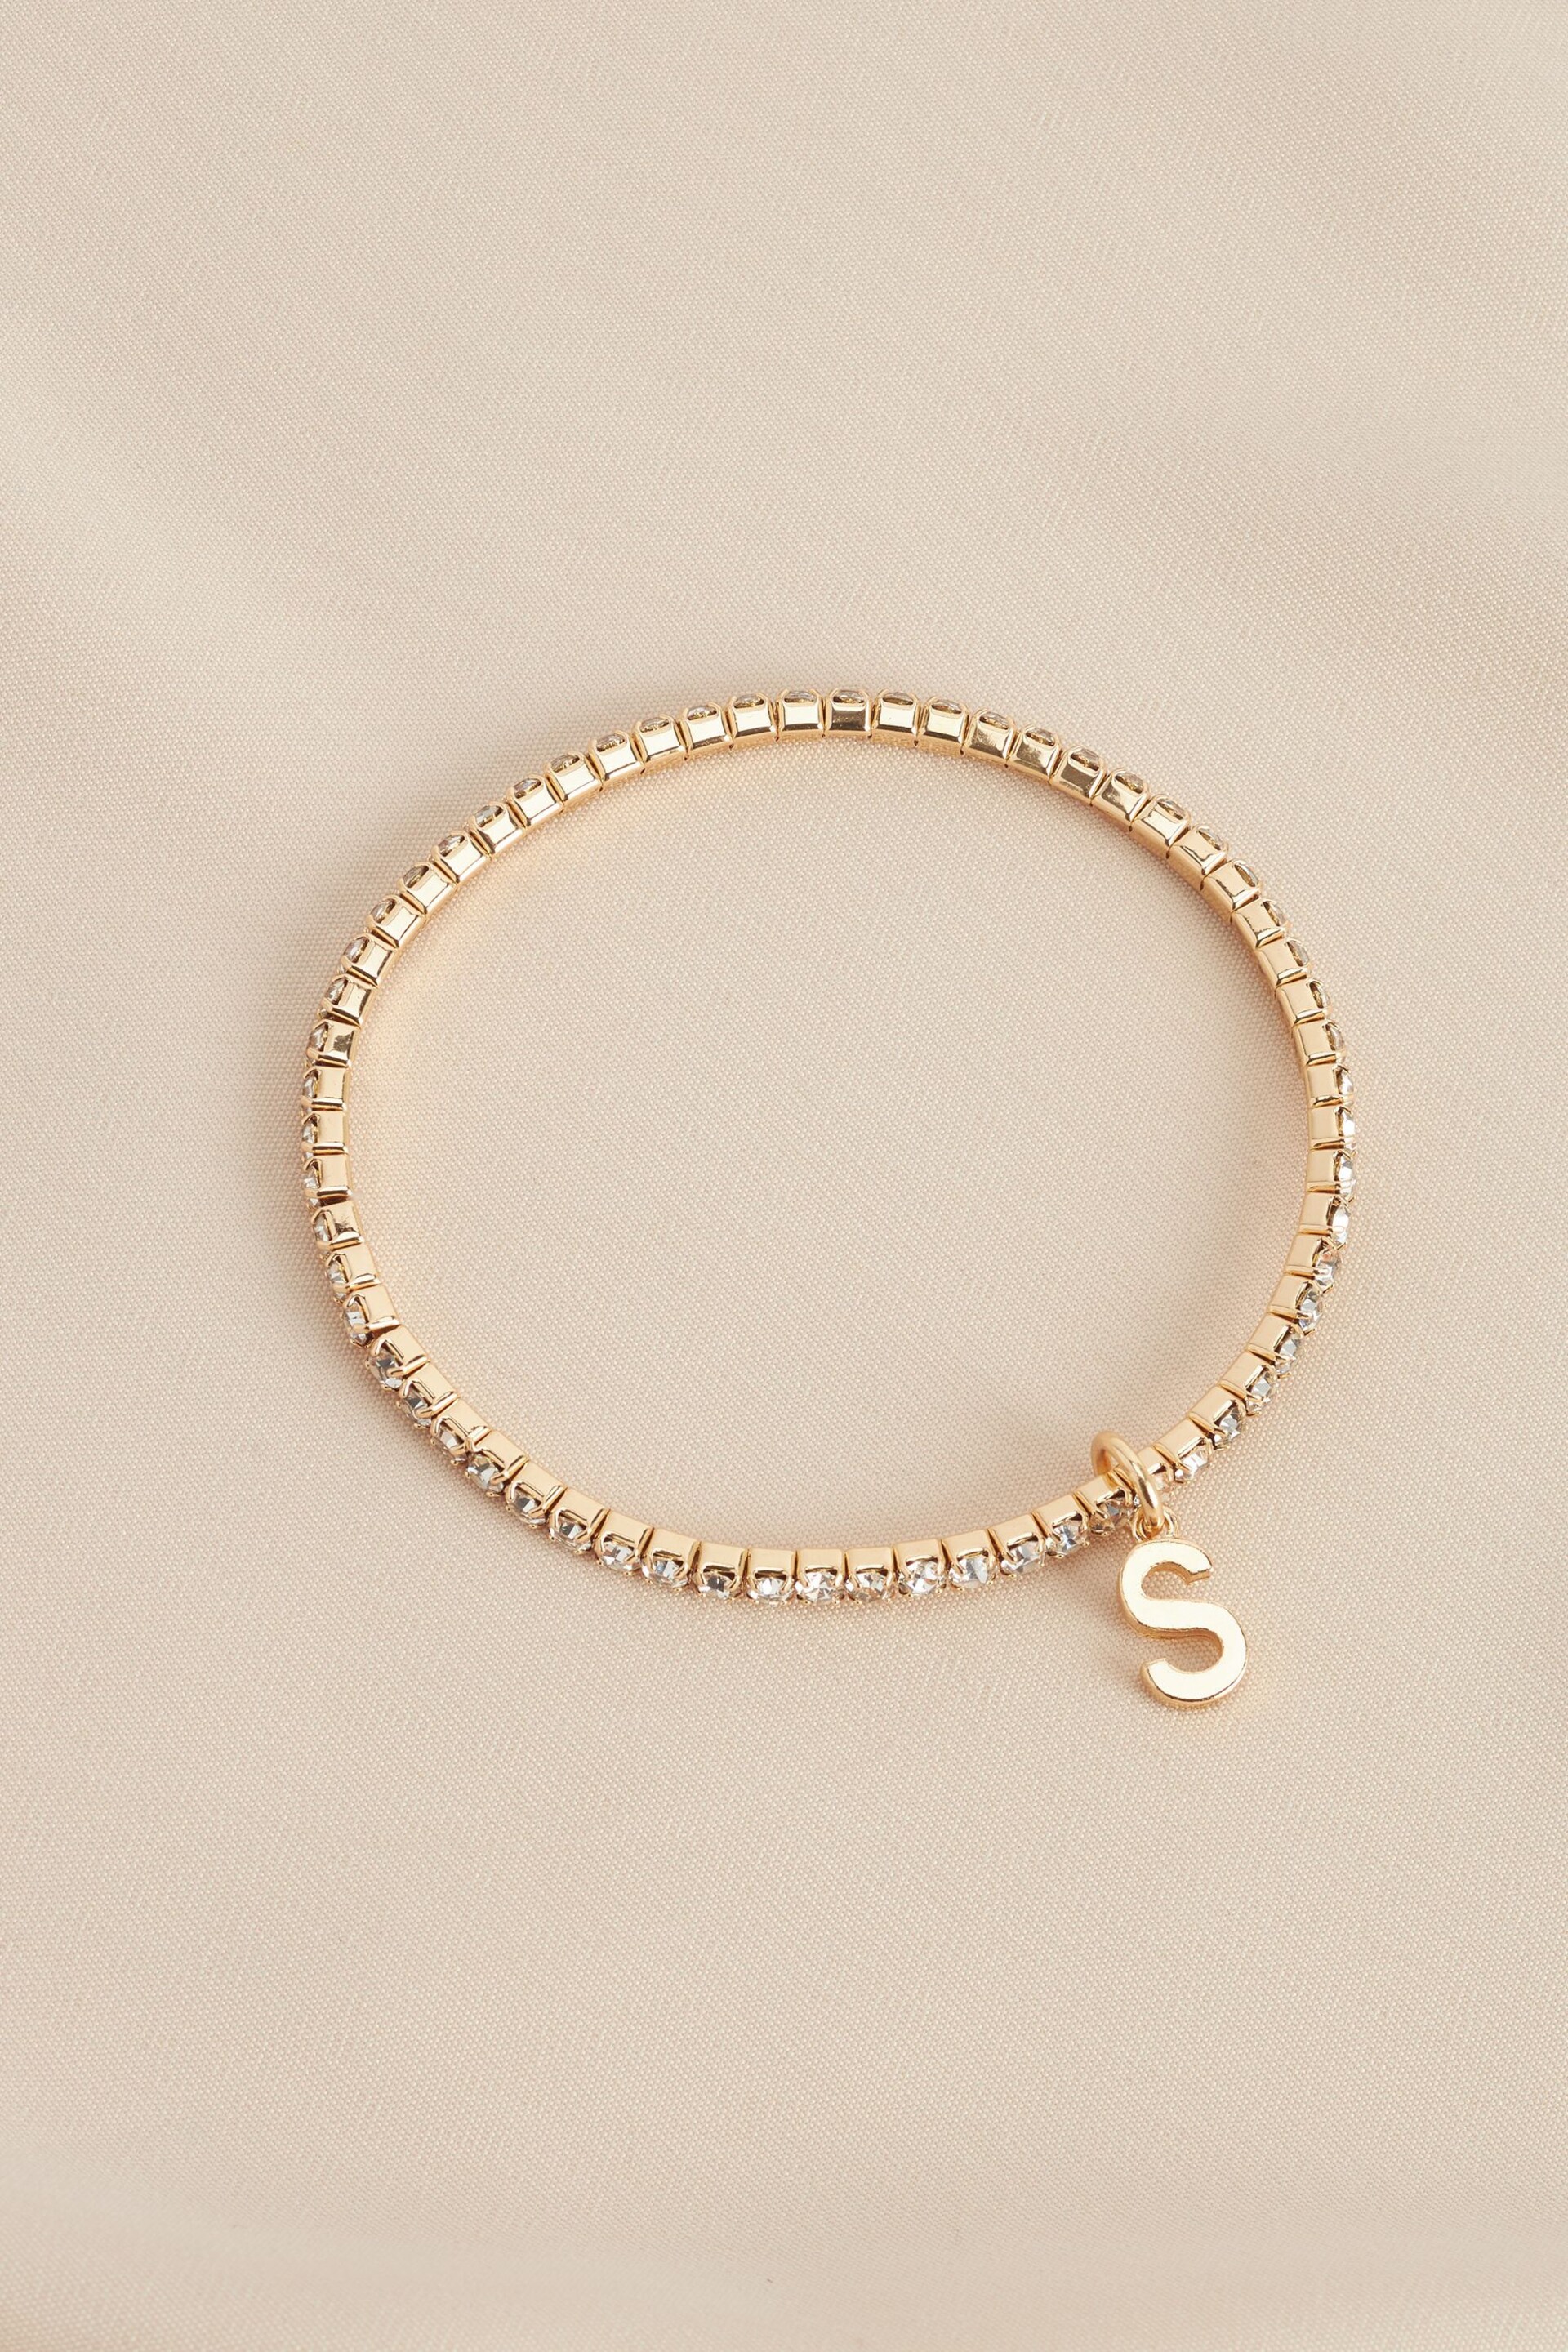 Gold Tone Initial Bracelet Letter S - Image 1 of 3